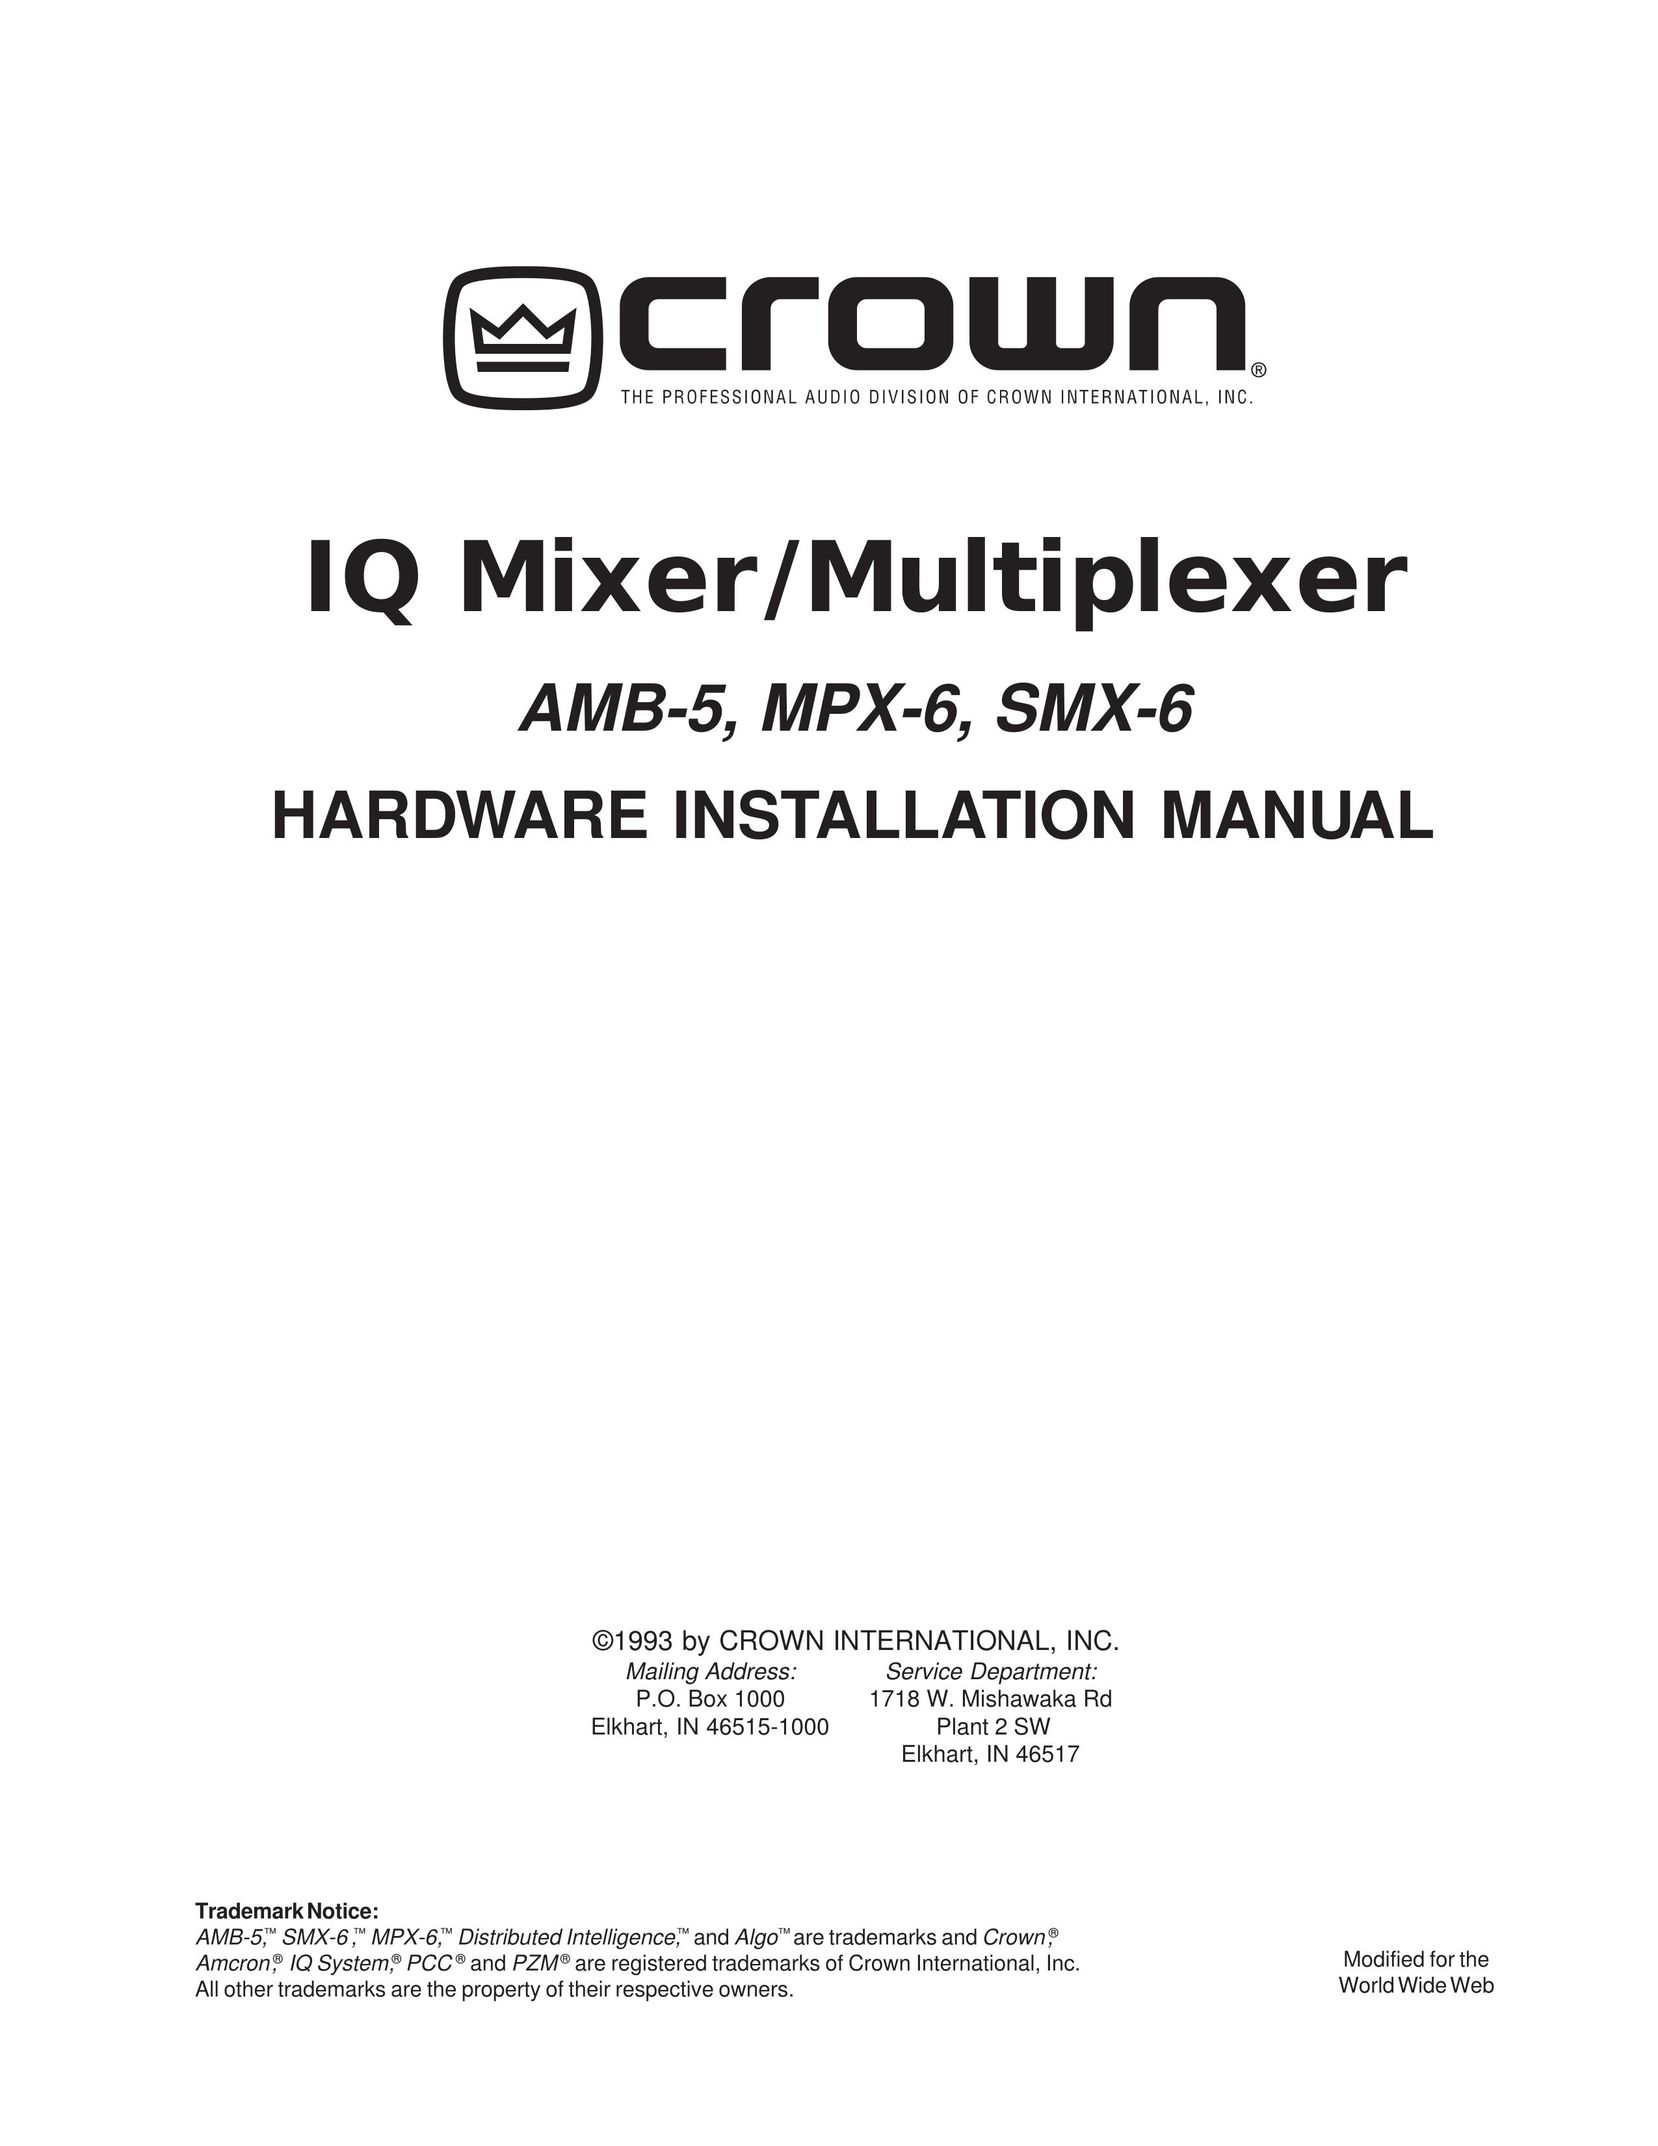 Crown AMB-5 Mixer User Manual